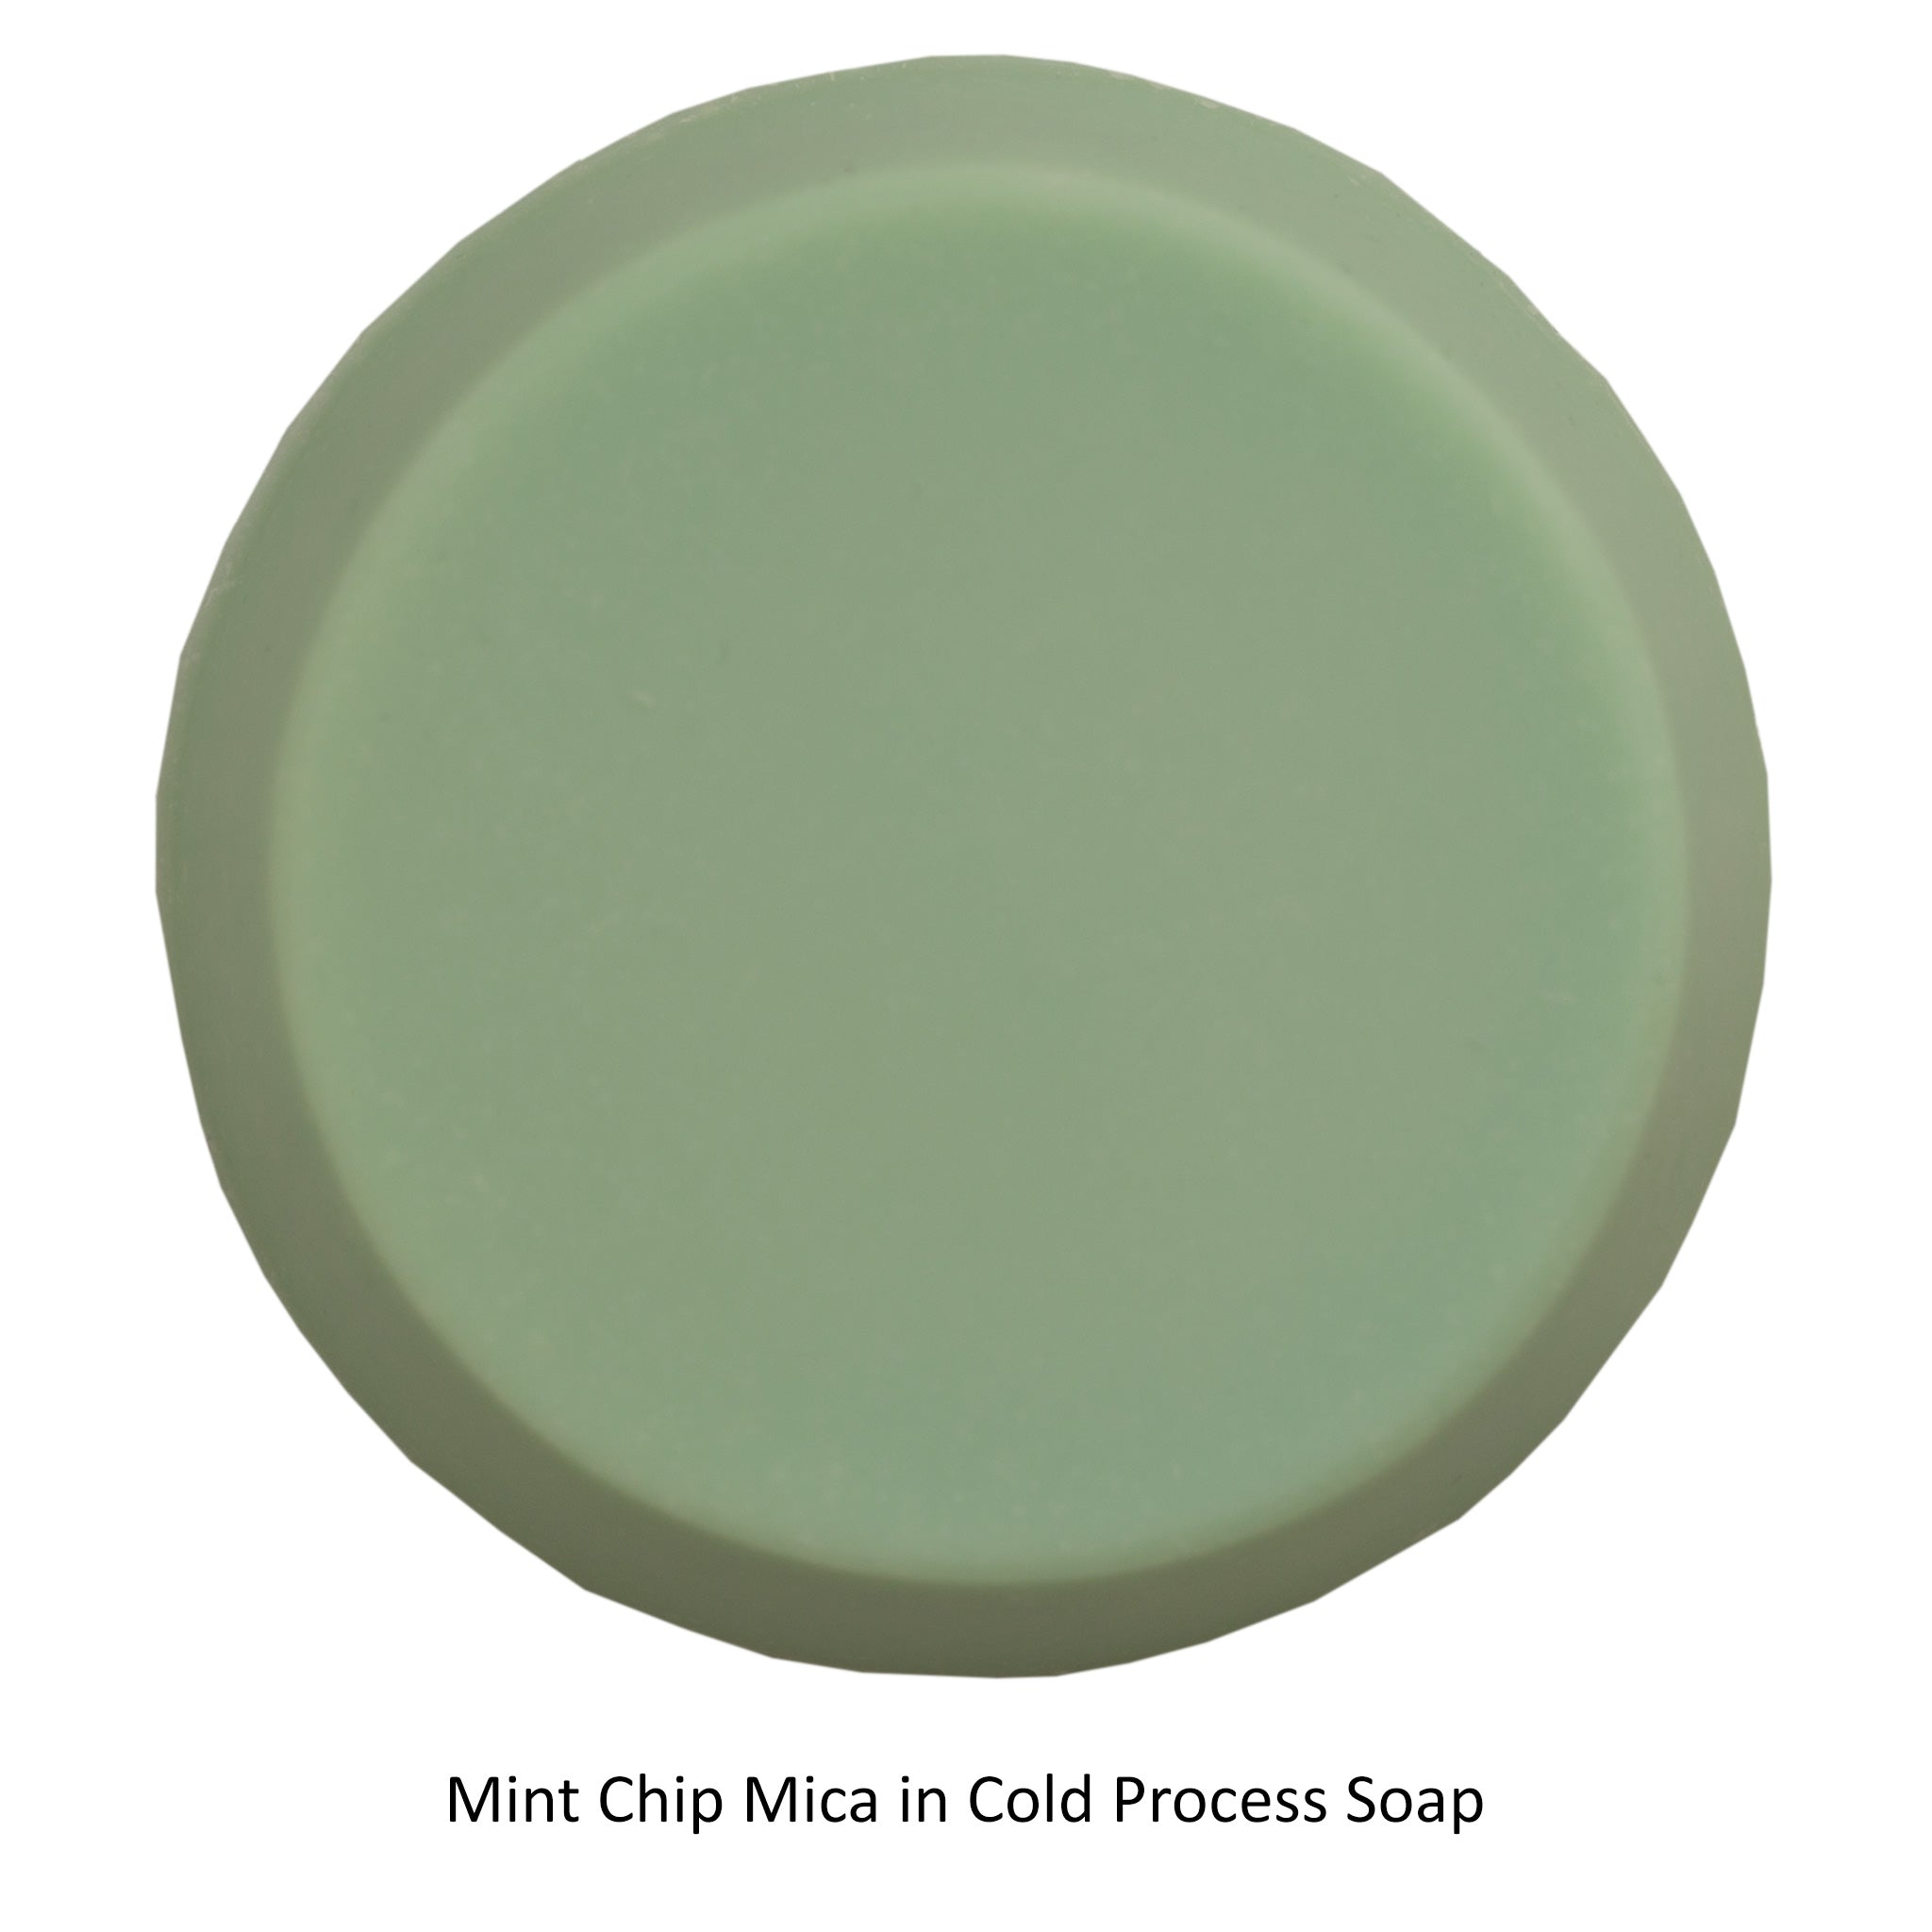 Mint Chip Mica